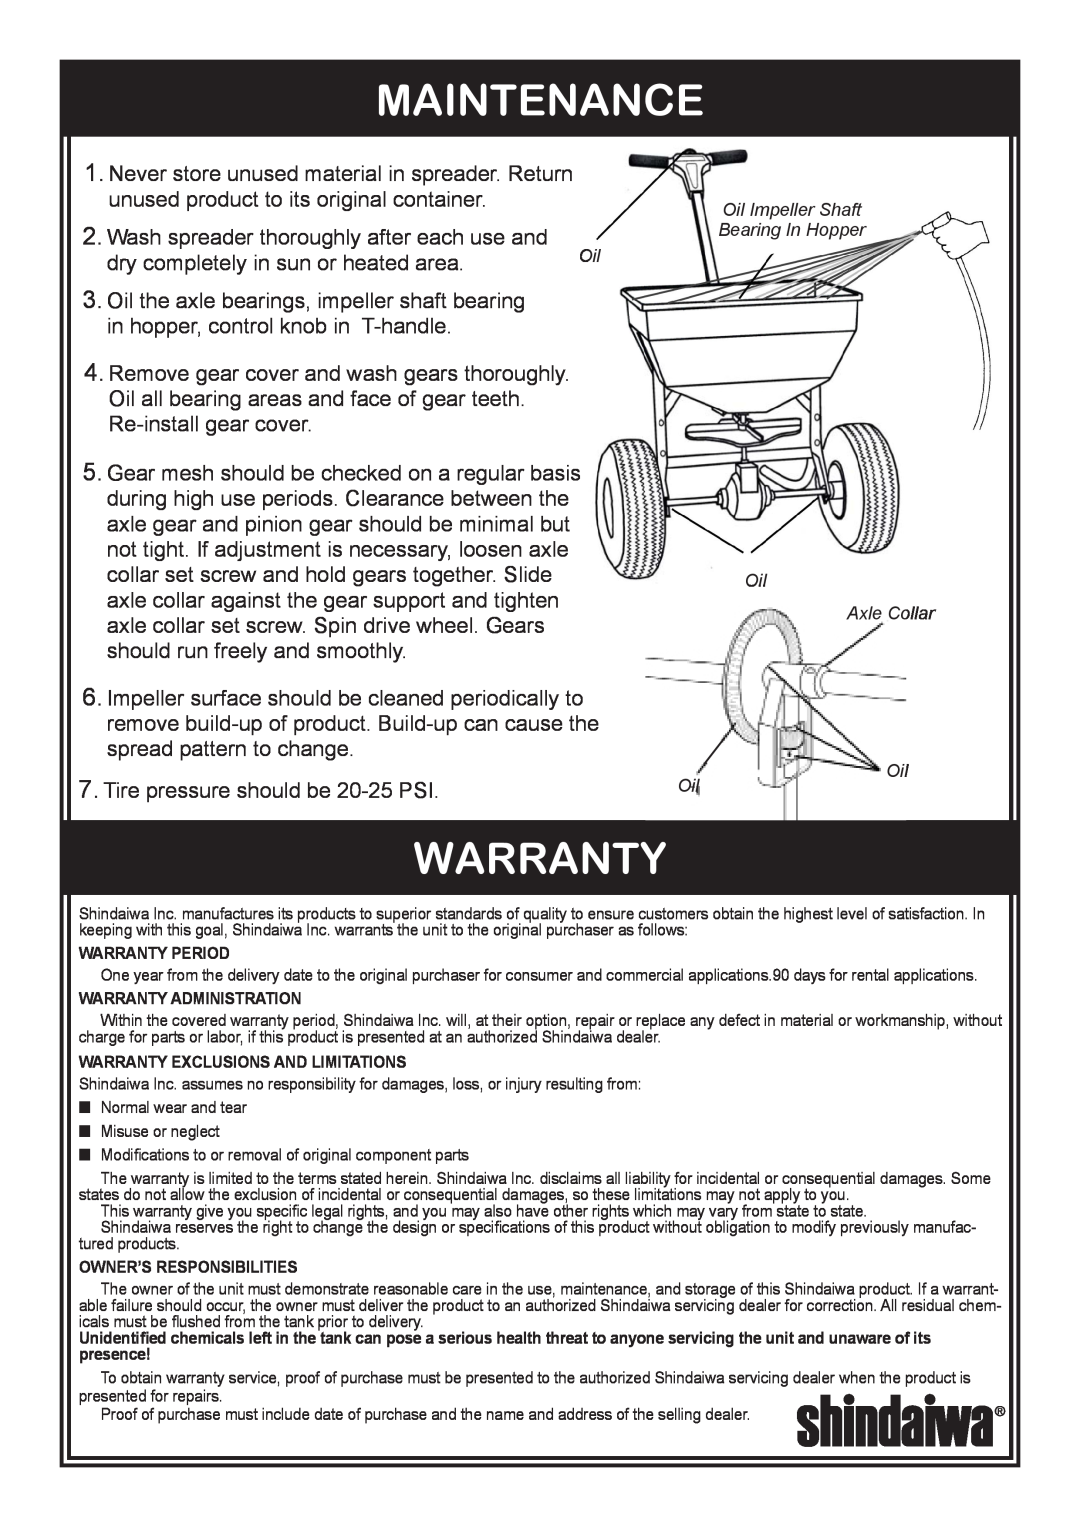 Shindaiwa 76RS owner manual Maintenance, Warranty 